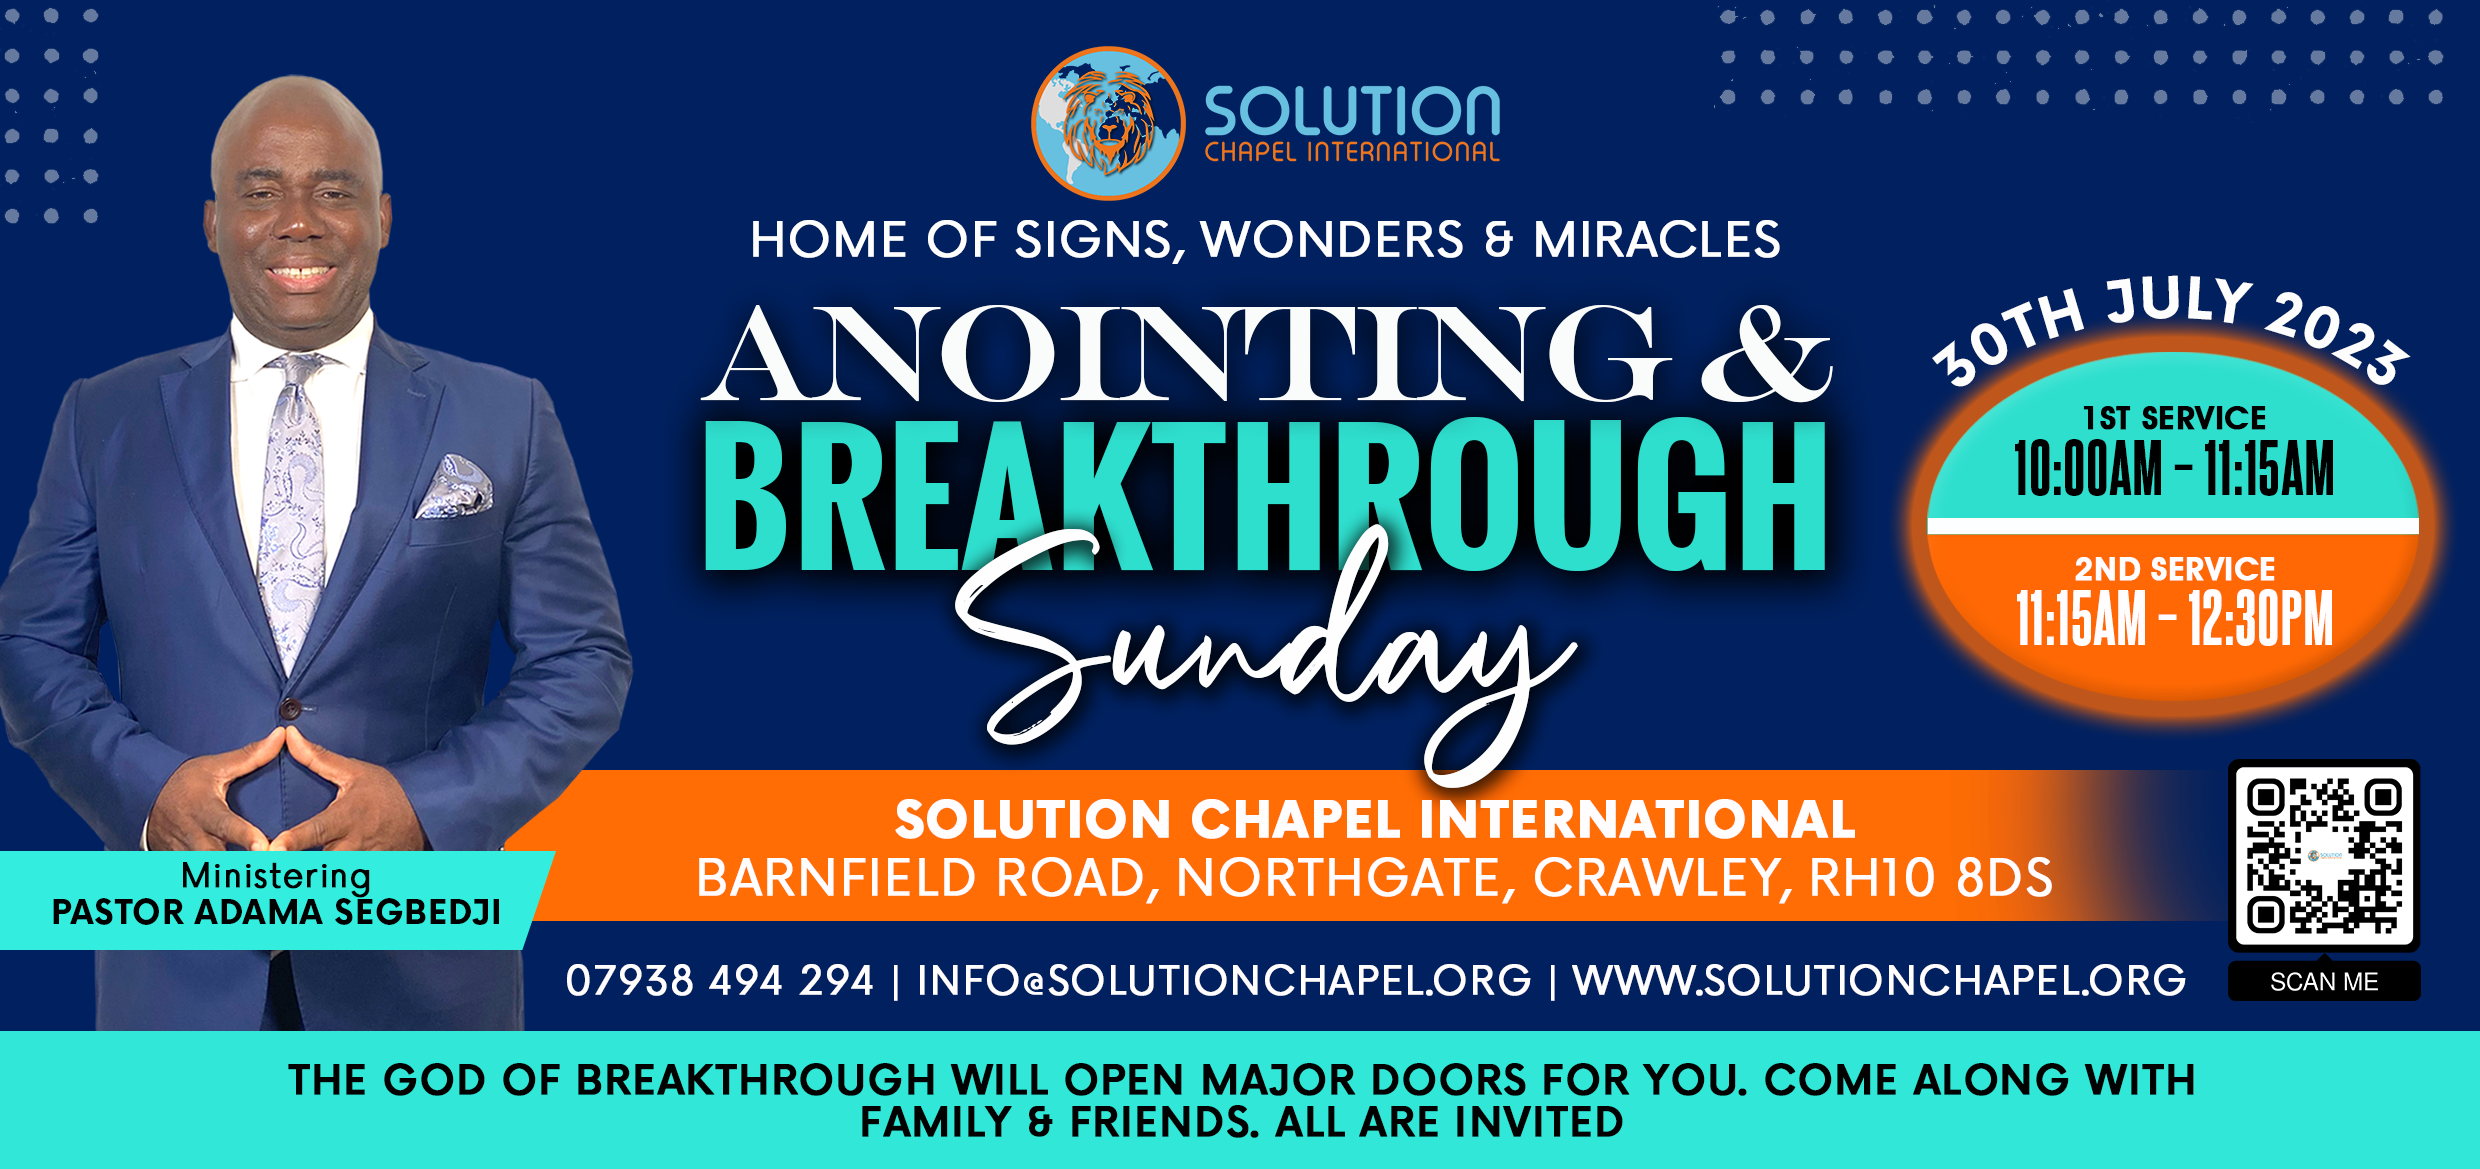 "Anointing & Breakthrough Sunday"